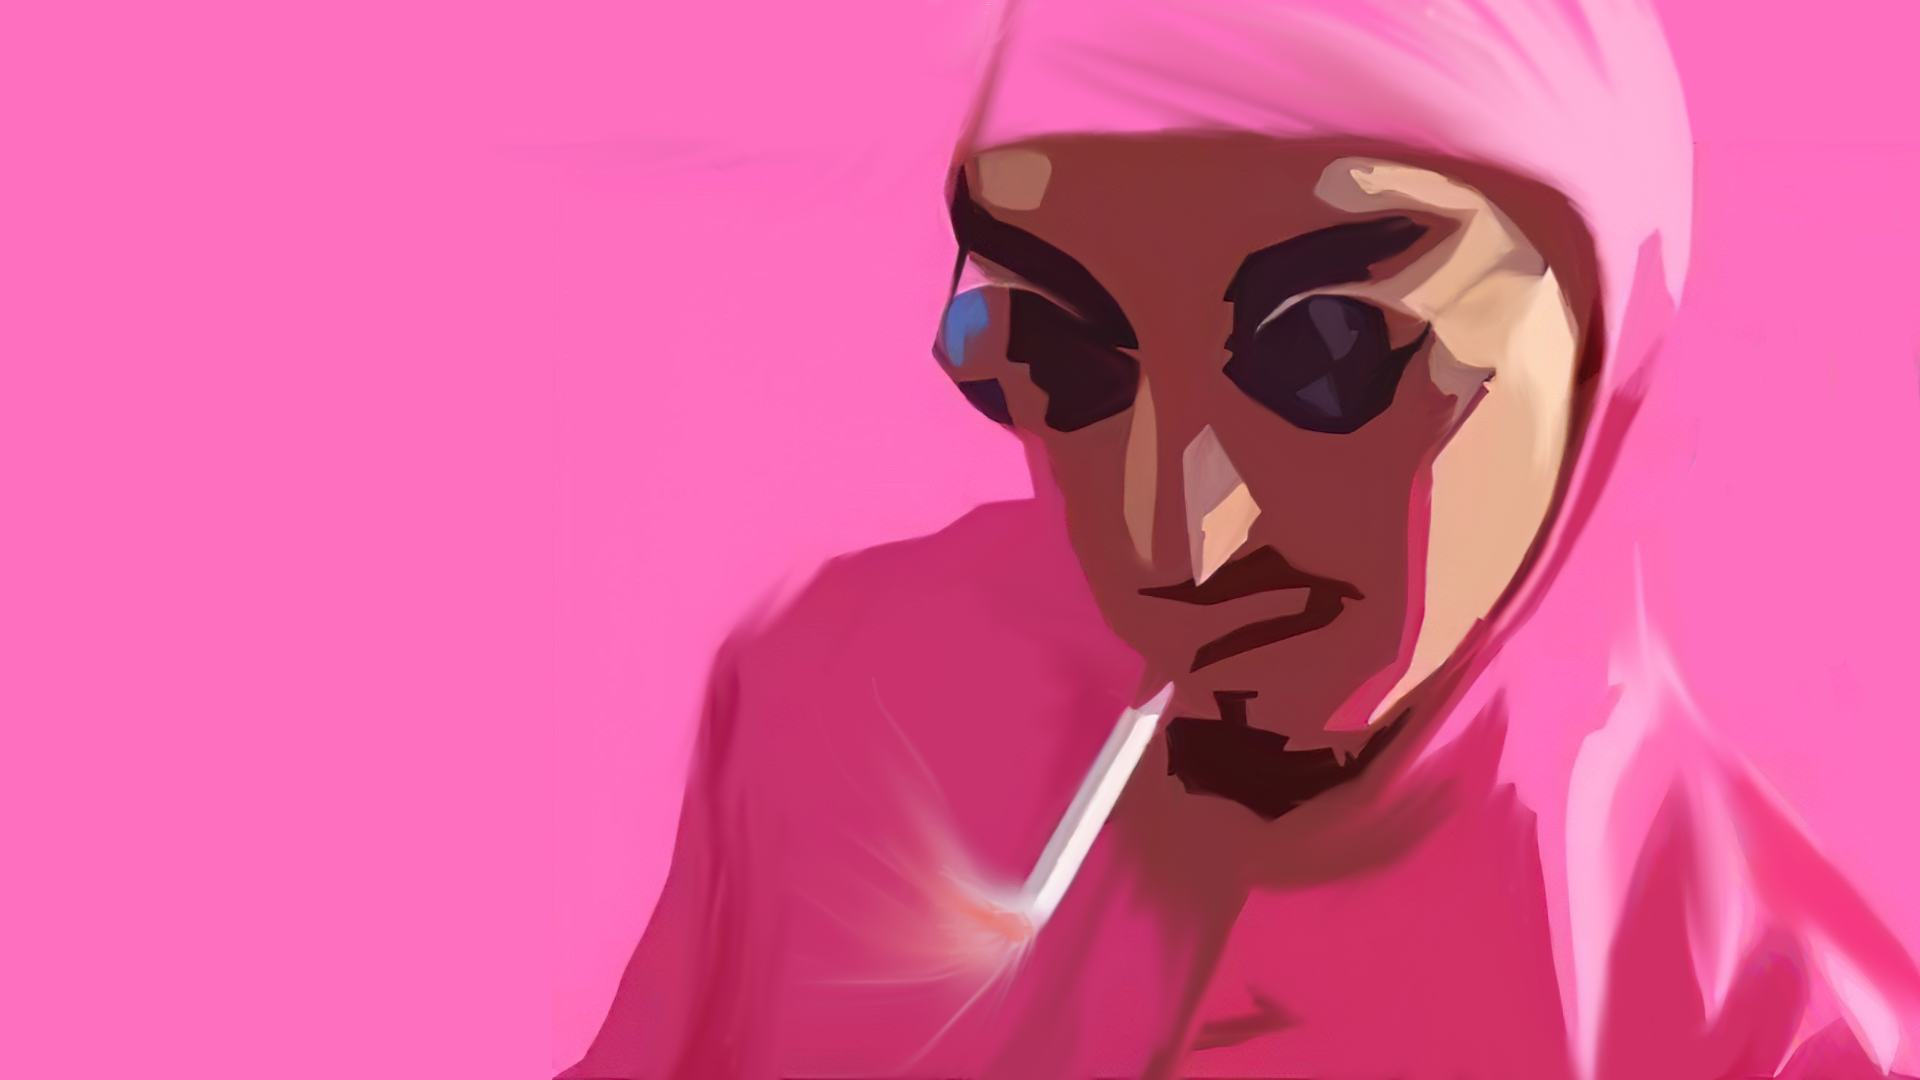 1920x1080 Pink Guy Smoking Cigarette Wallpaper Background Image. 